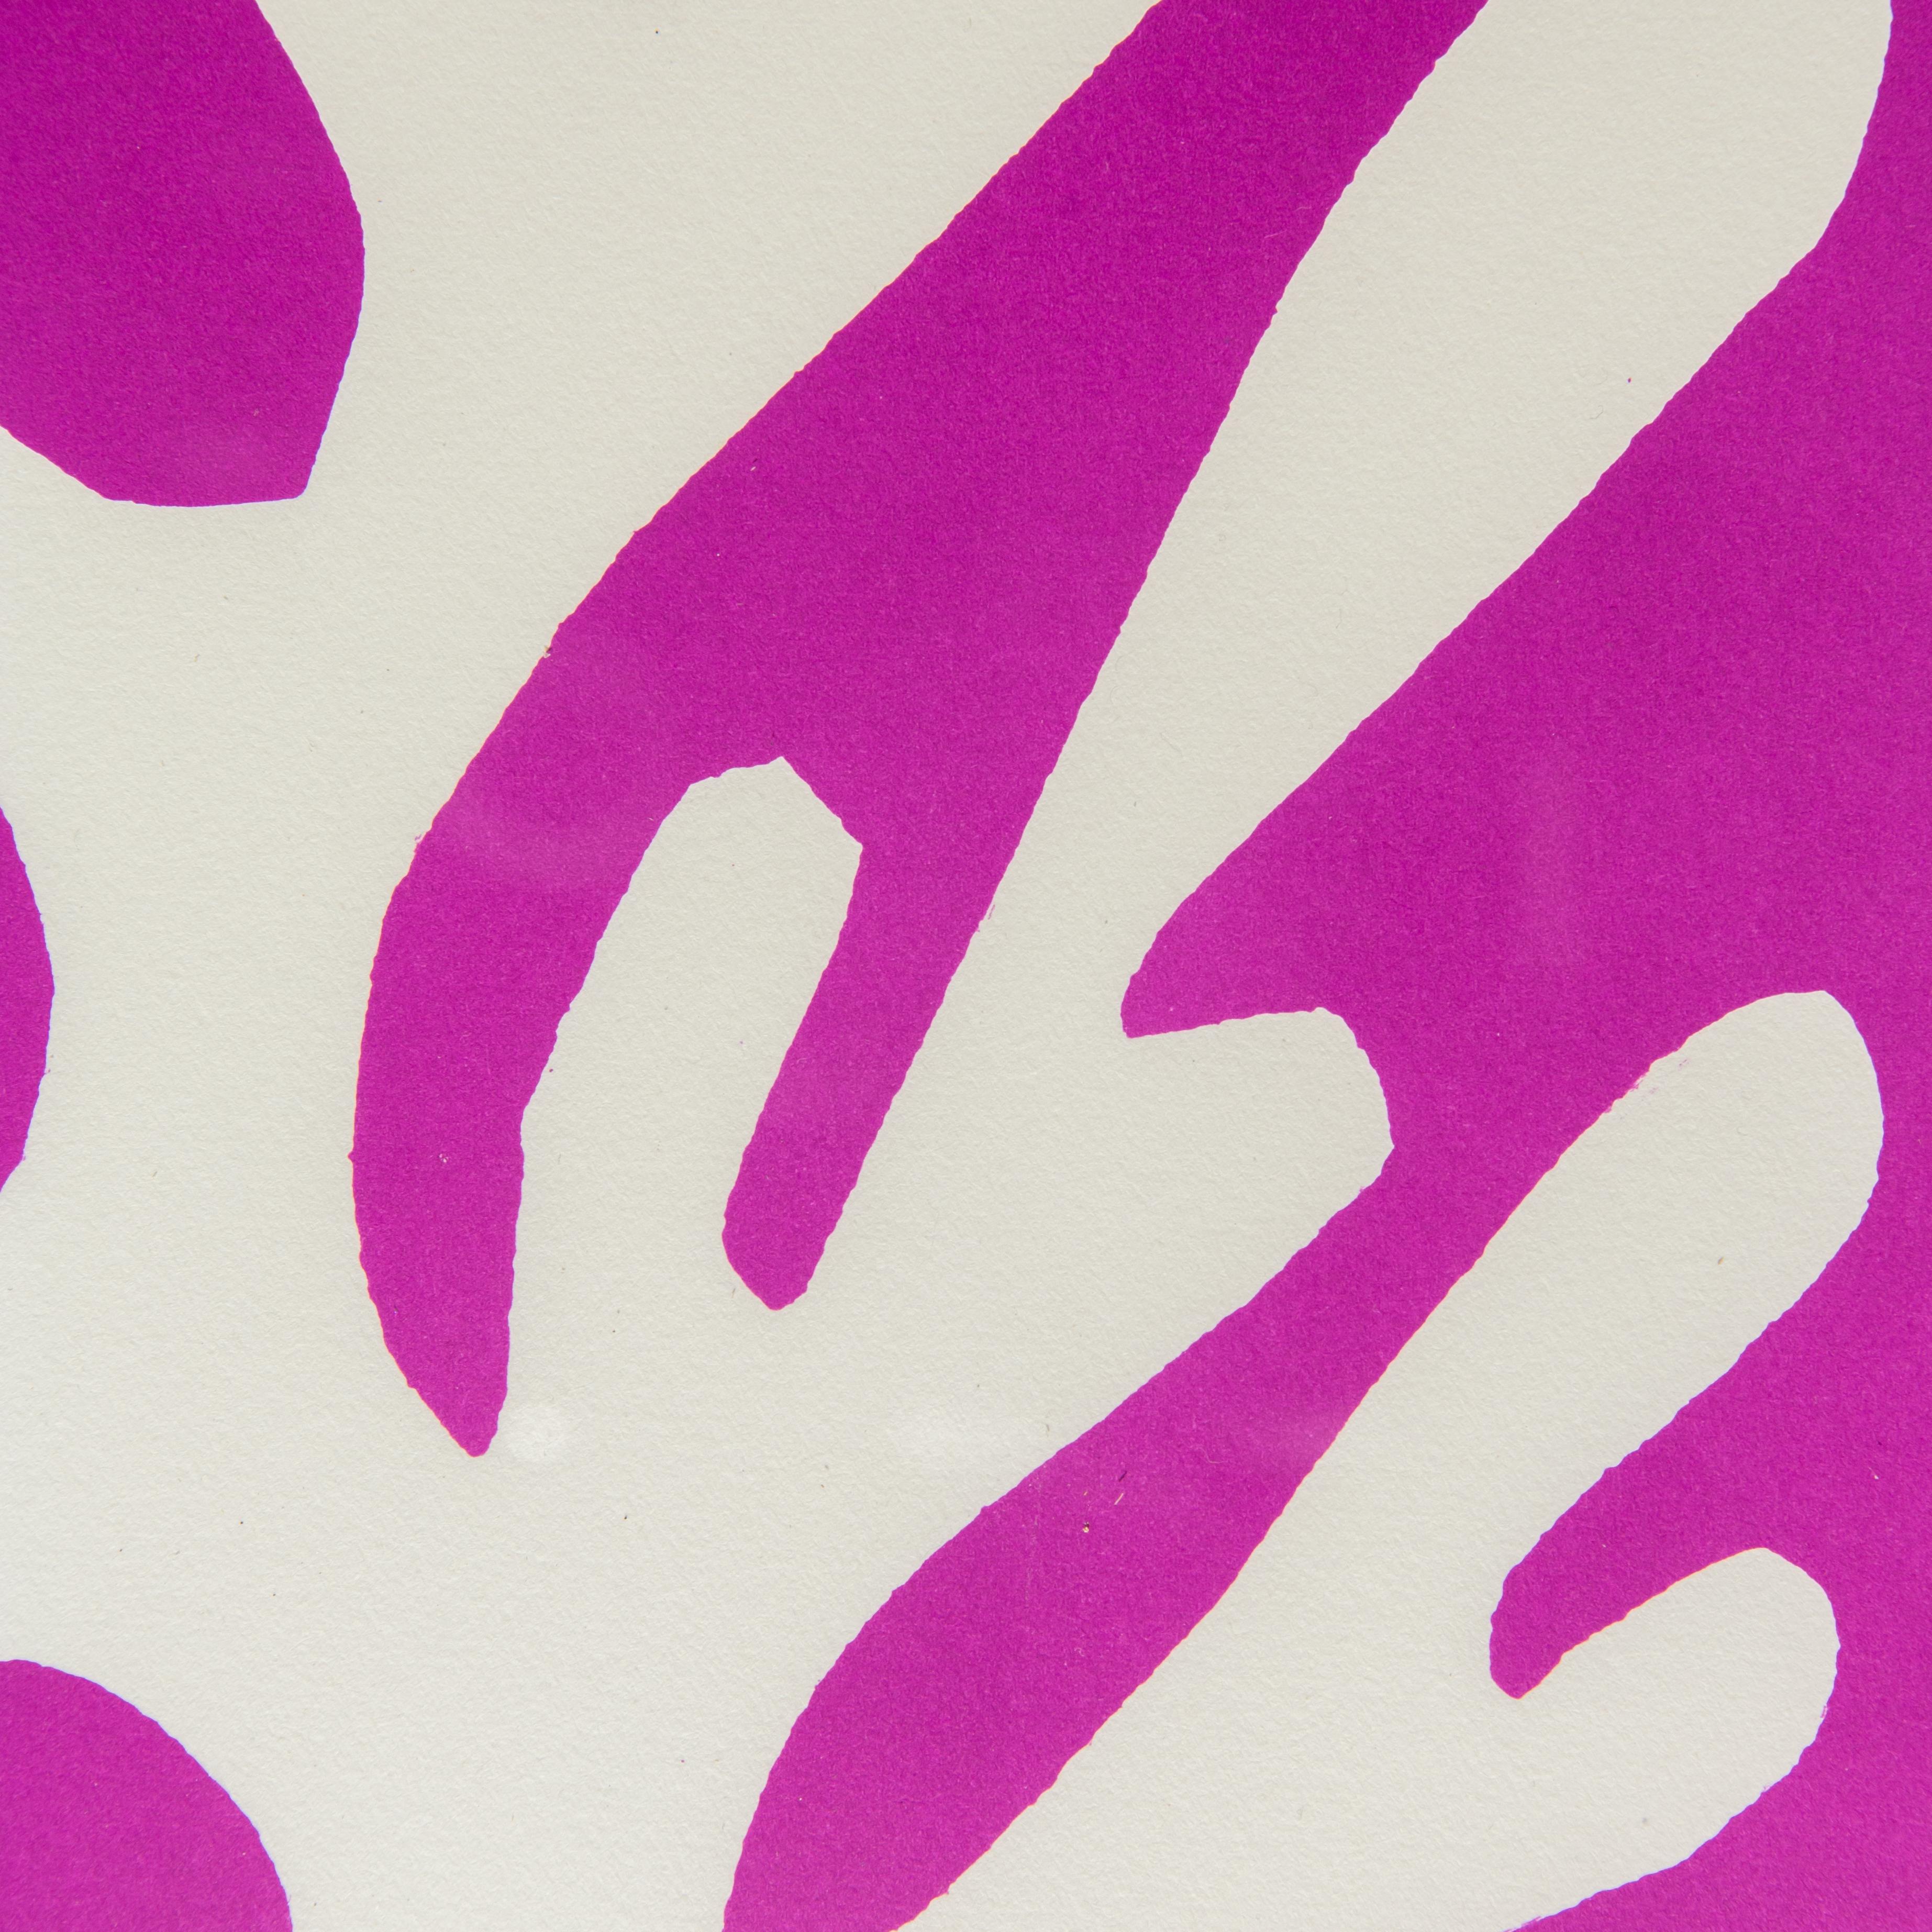 Algue Blanche sur fond Viole - Abstract Print by Henri Matisse